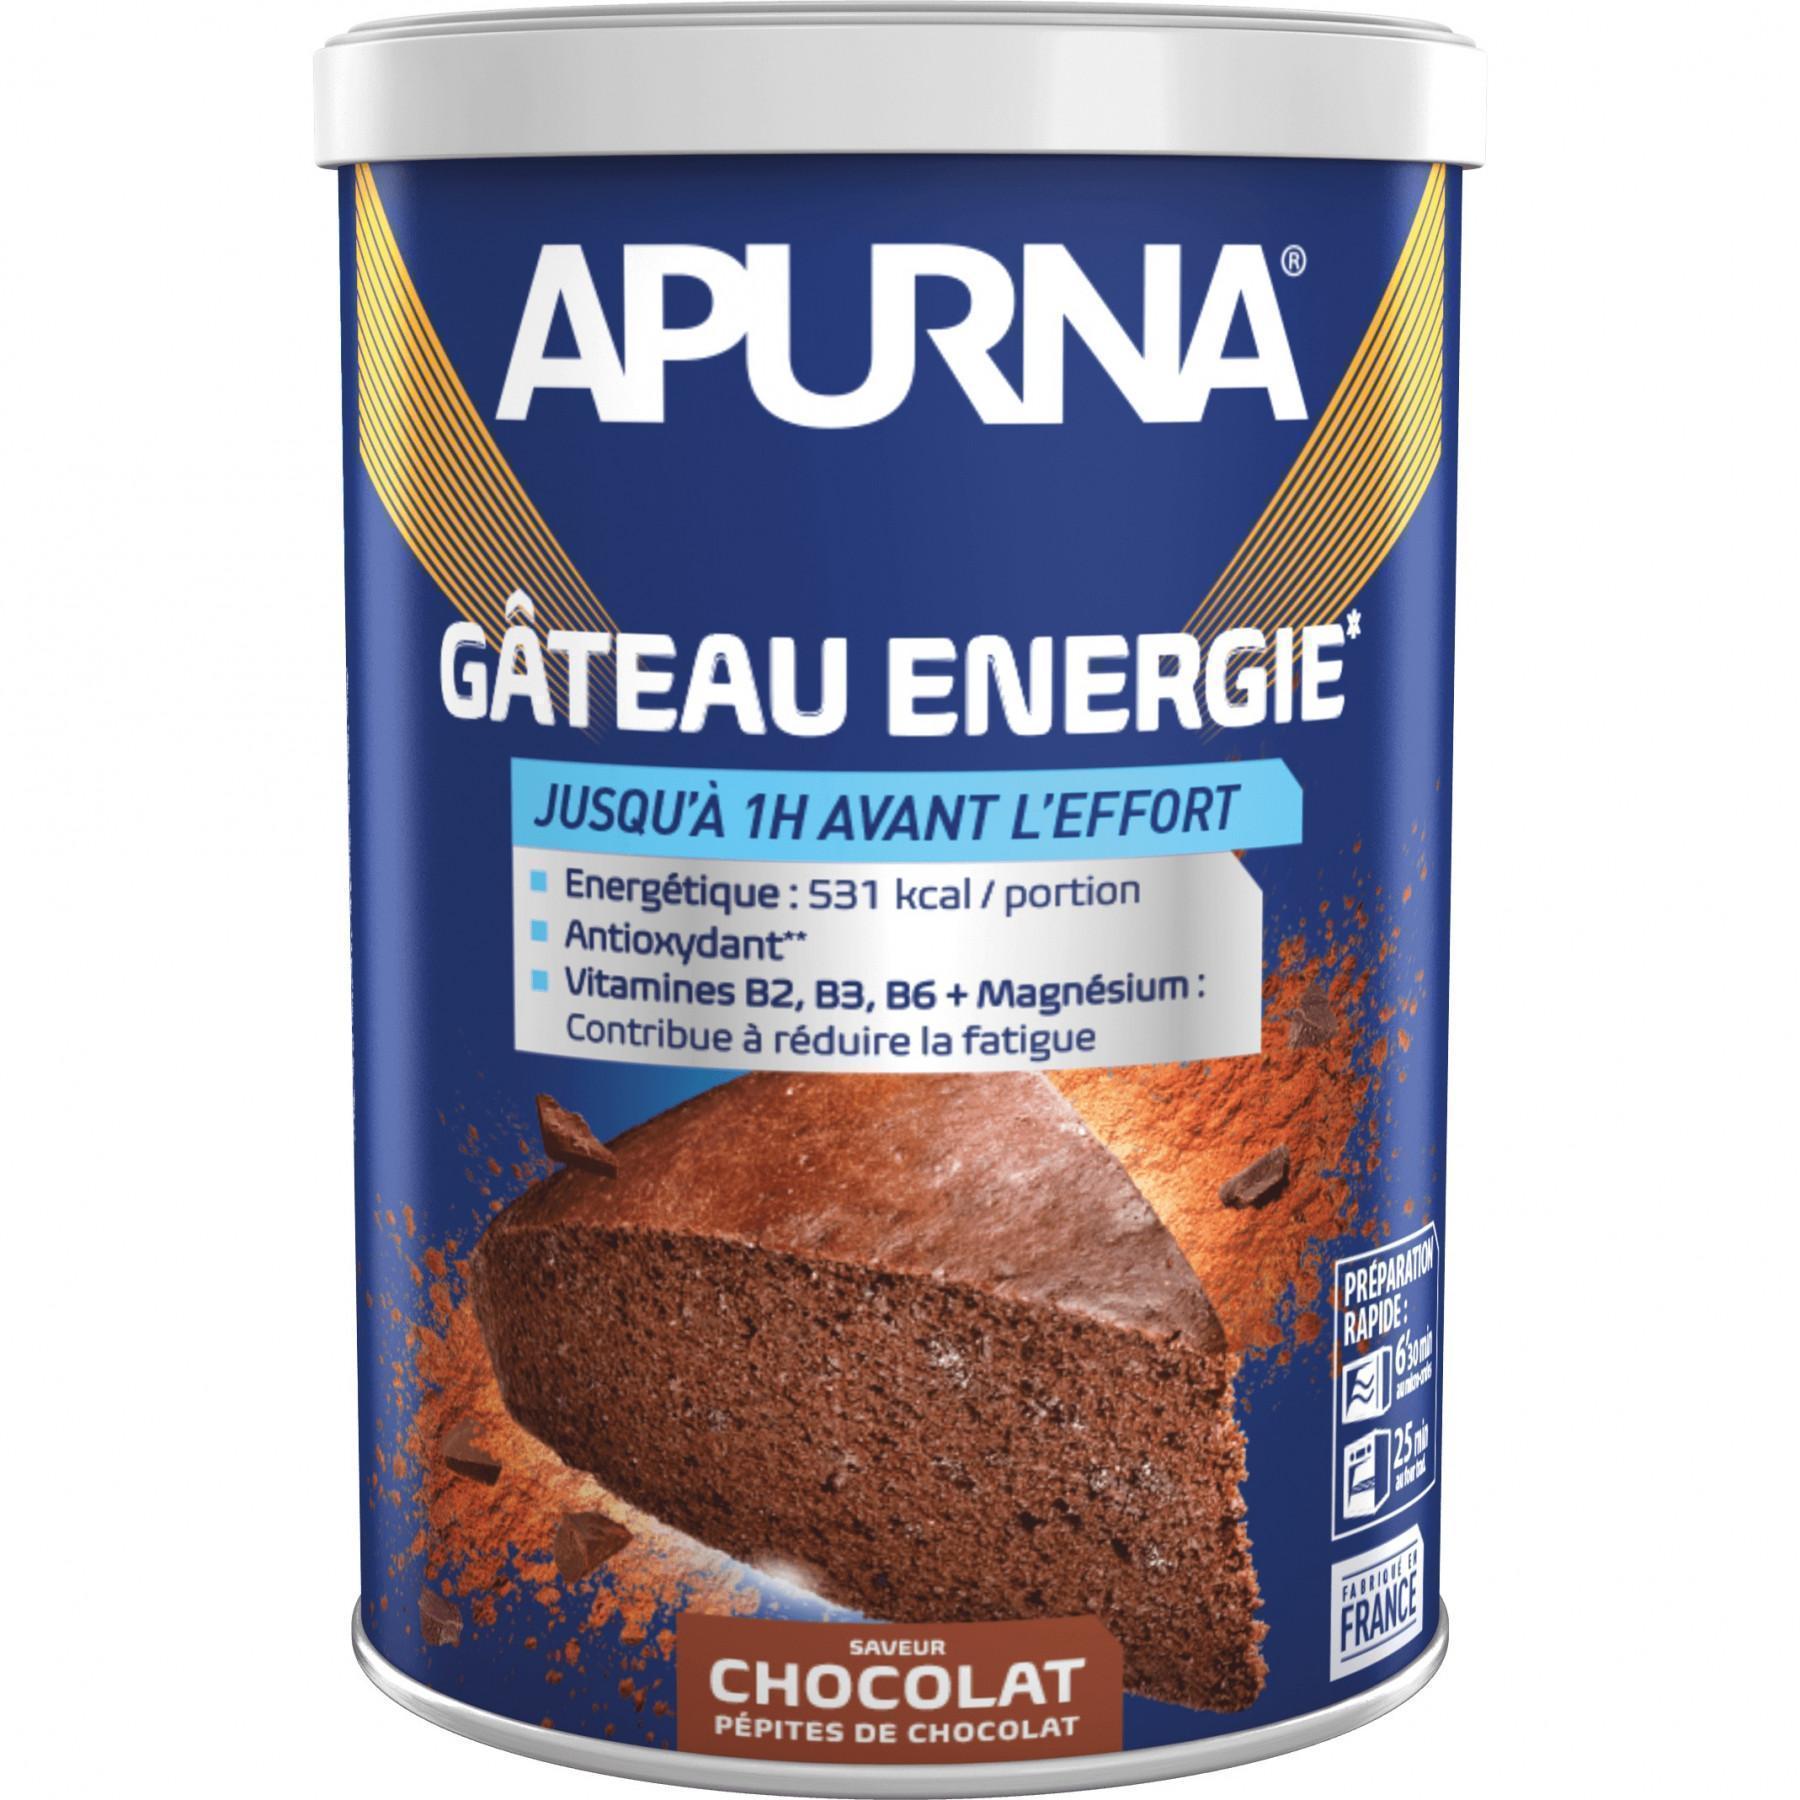 Tårta Apurna Energie Chocolat - 400g